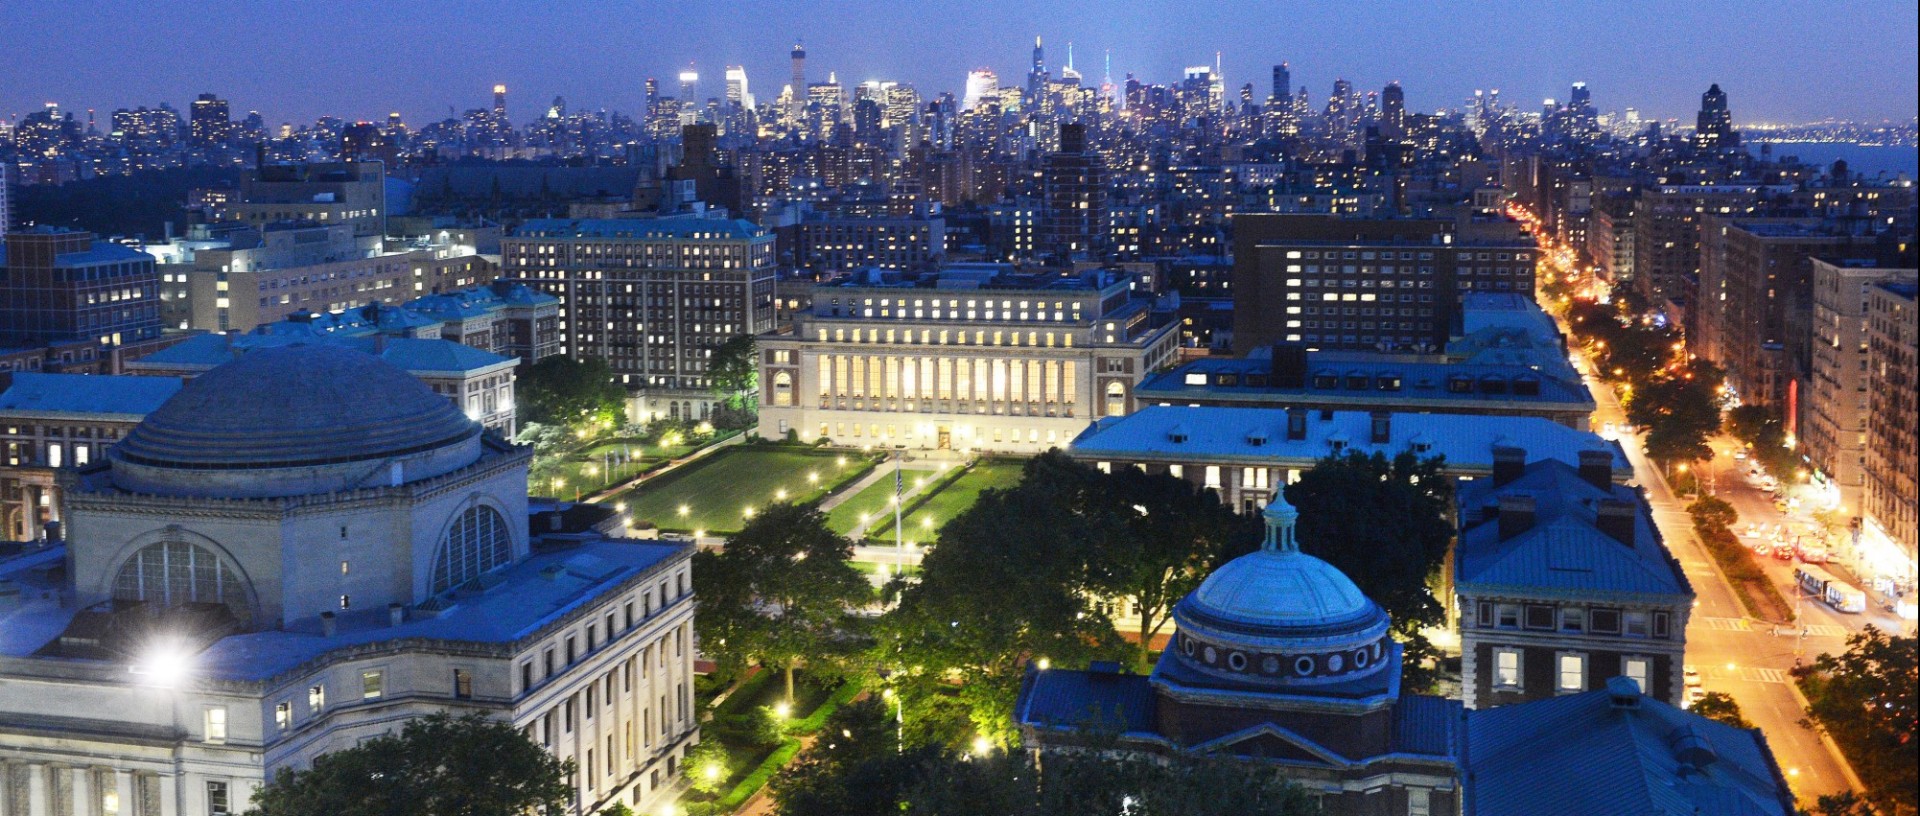 Columbia University Night Skyline